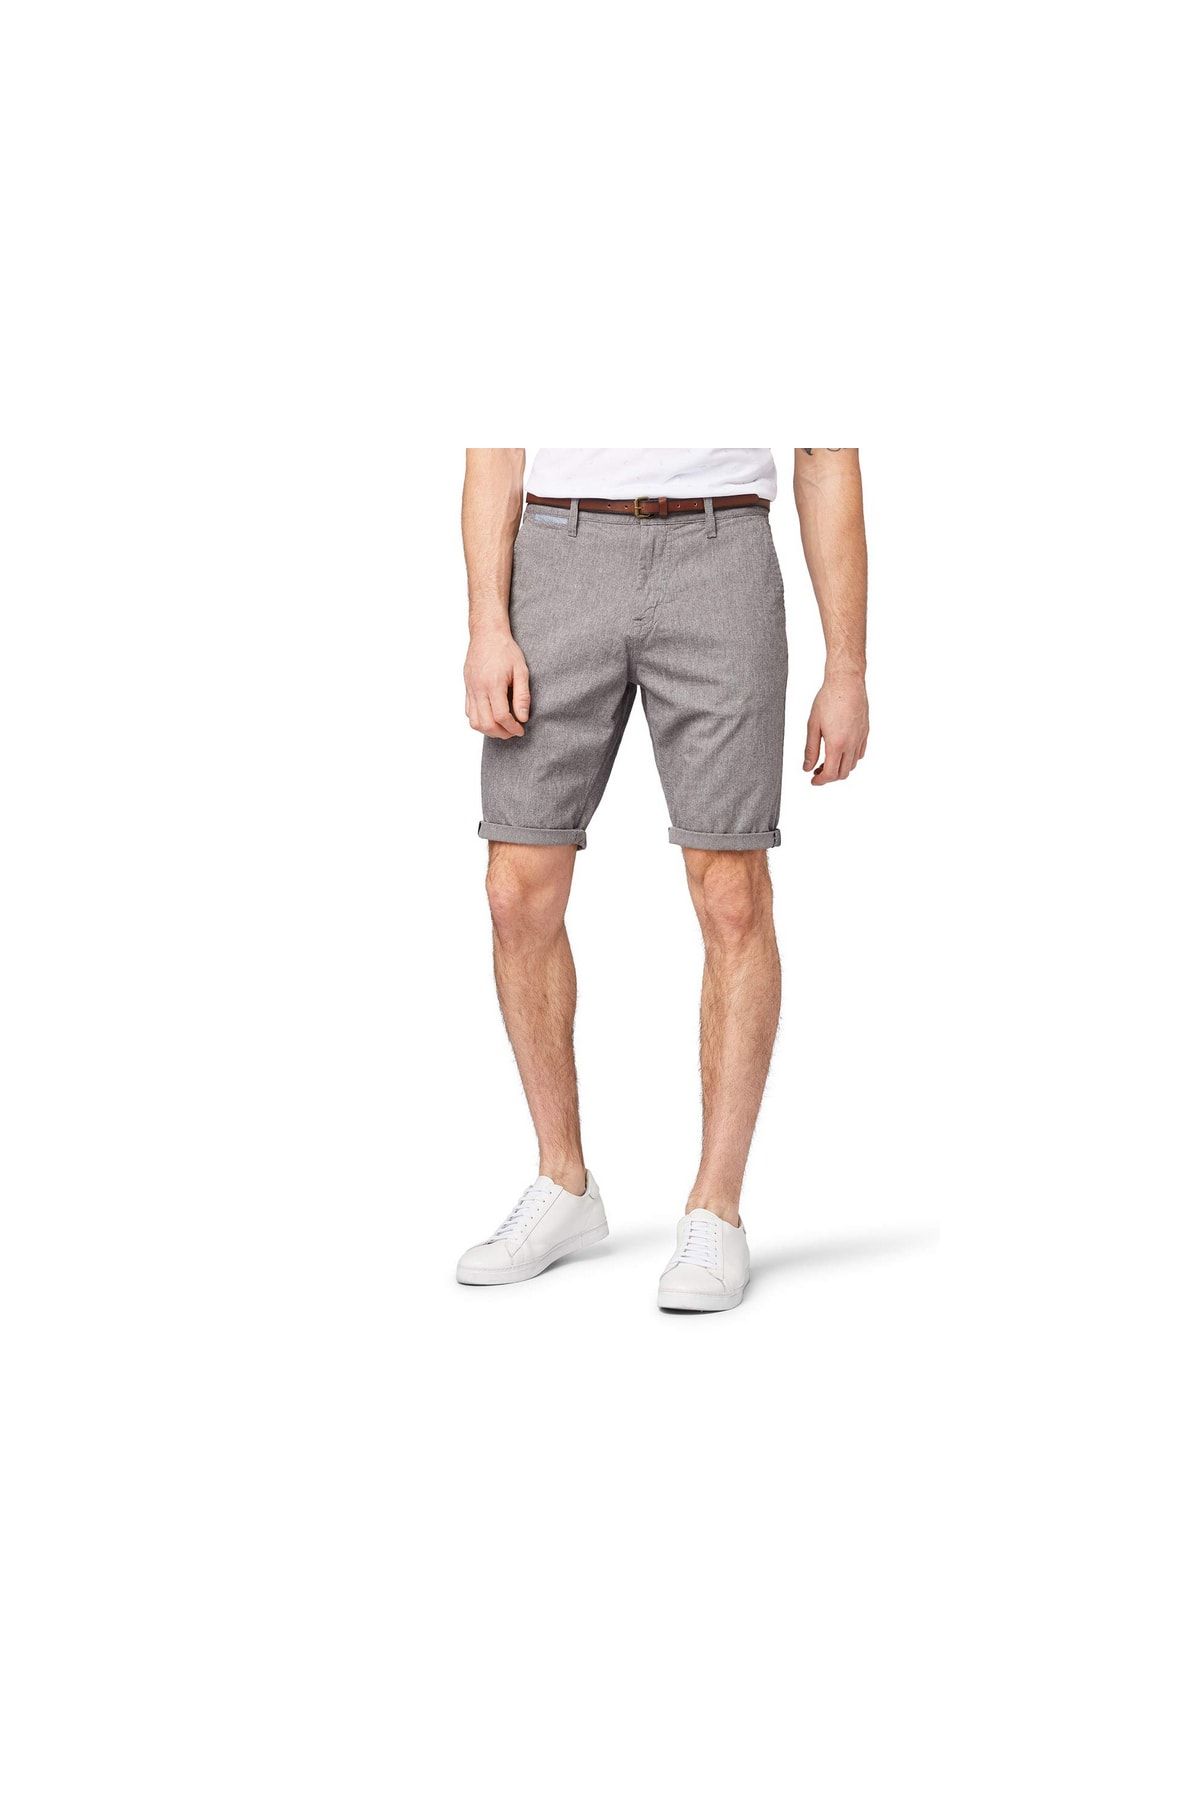 Tom Tailor Shorts - Gray - Normal Waist - Trendyol